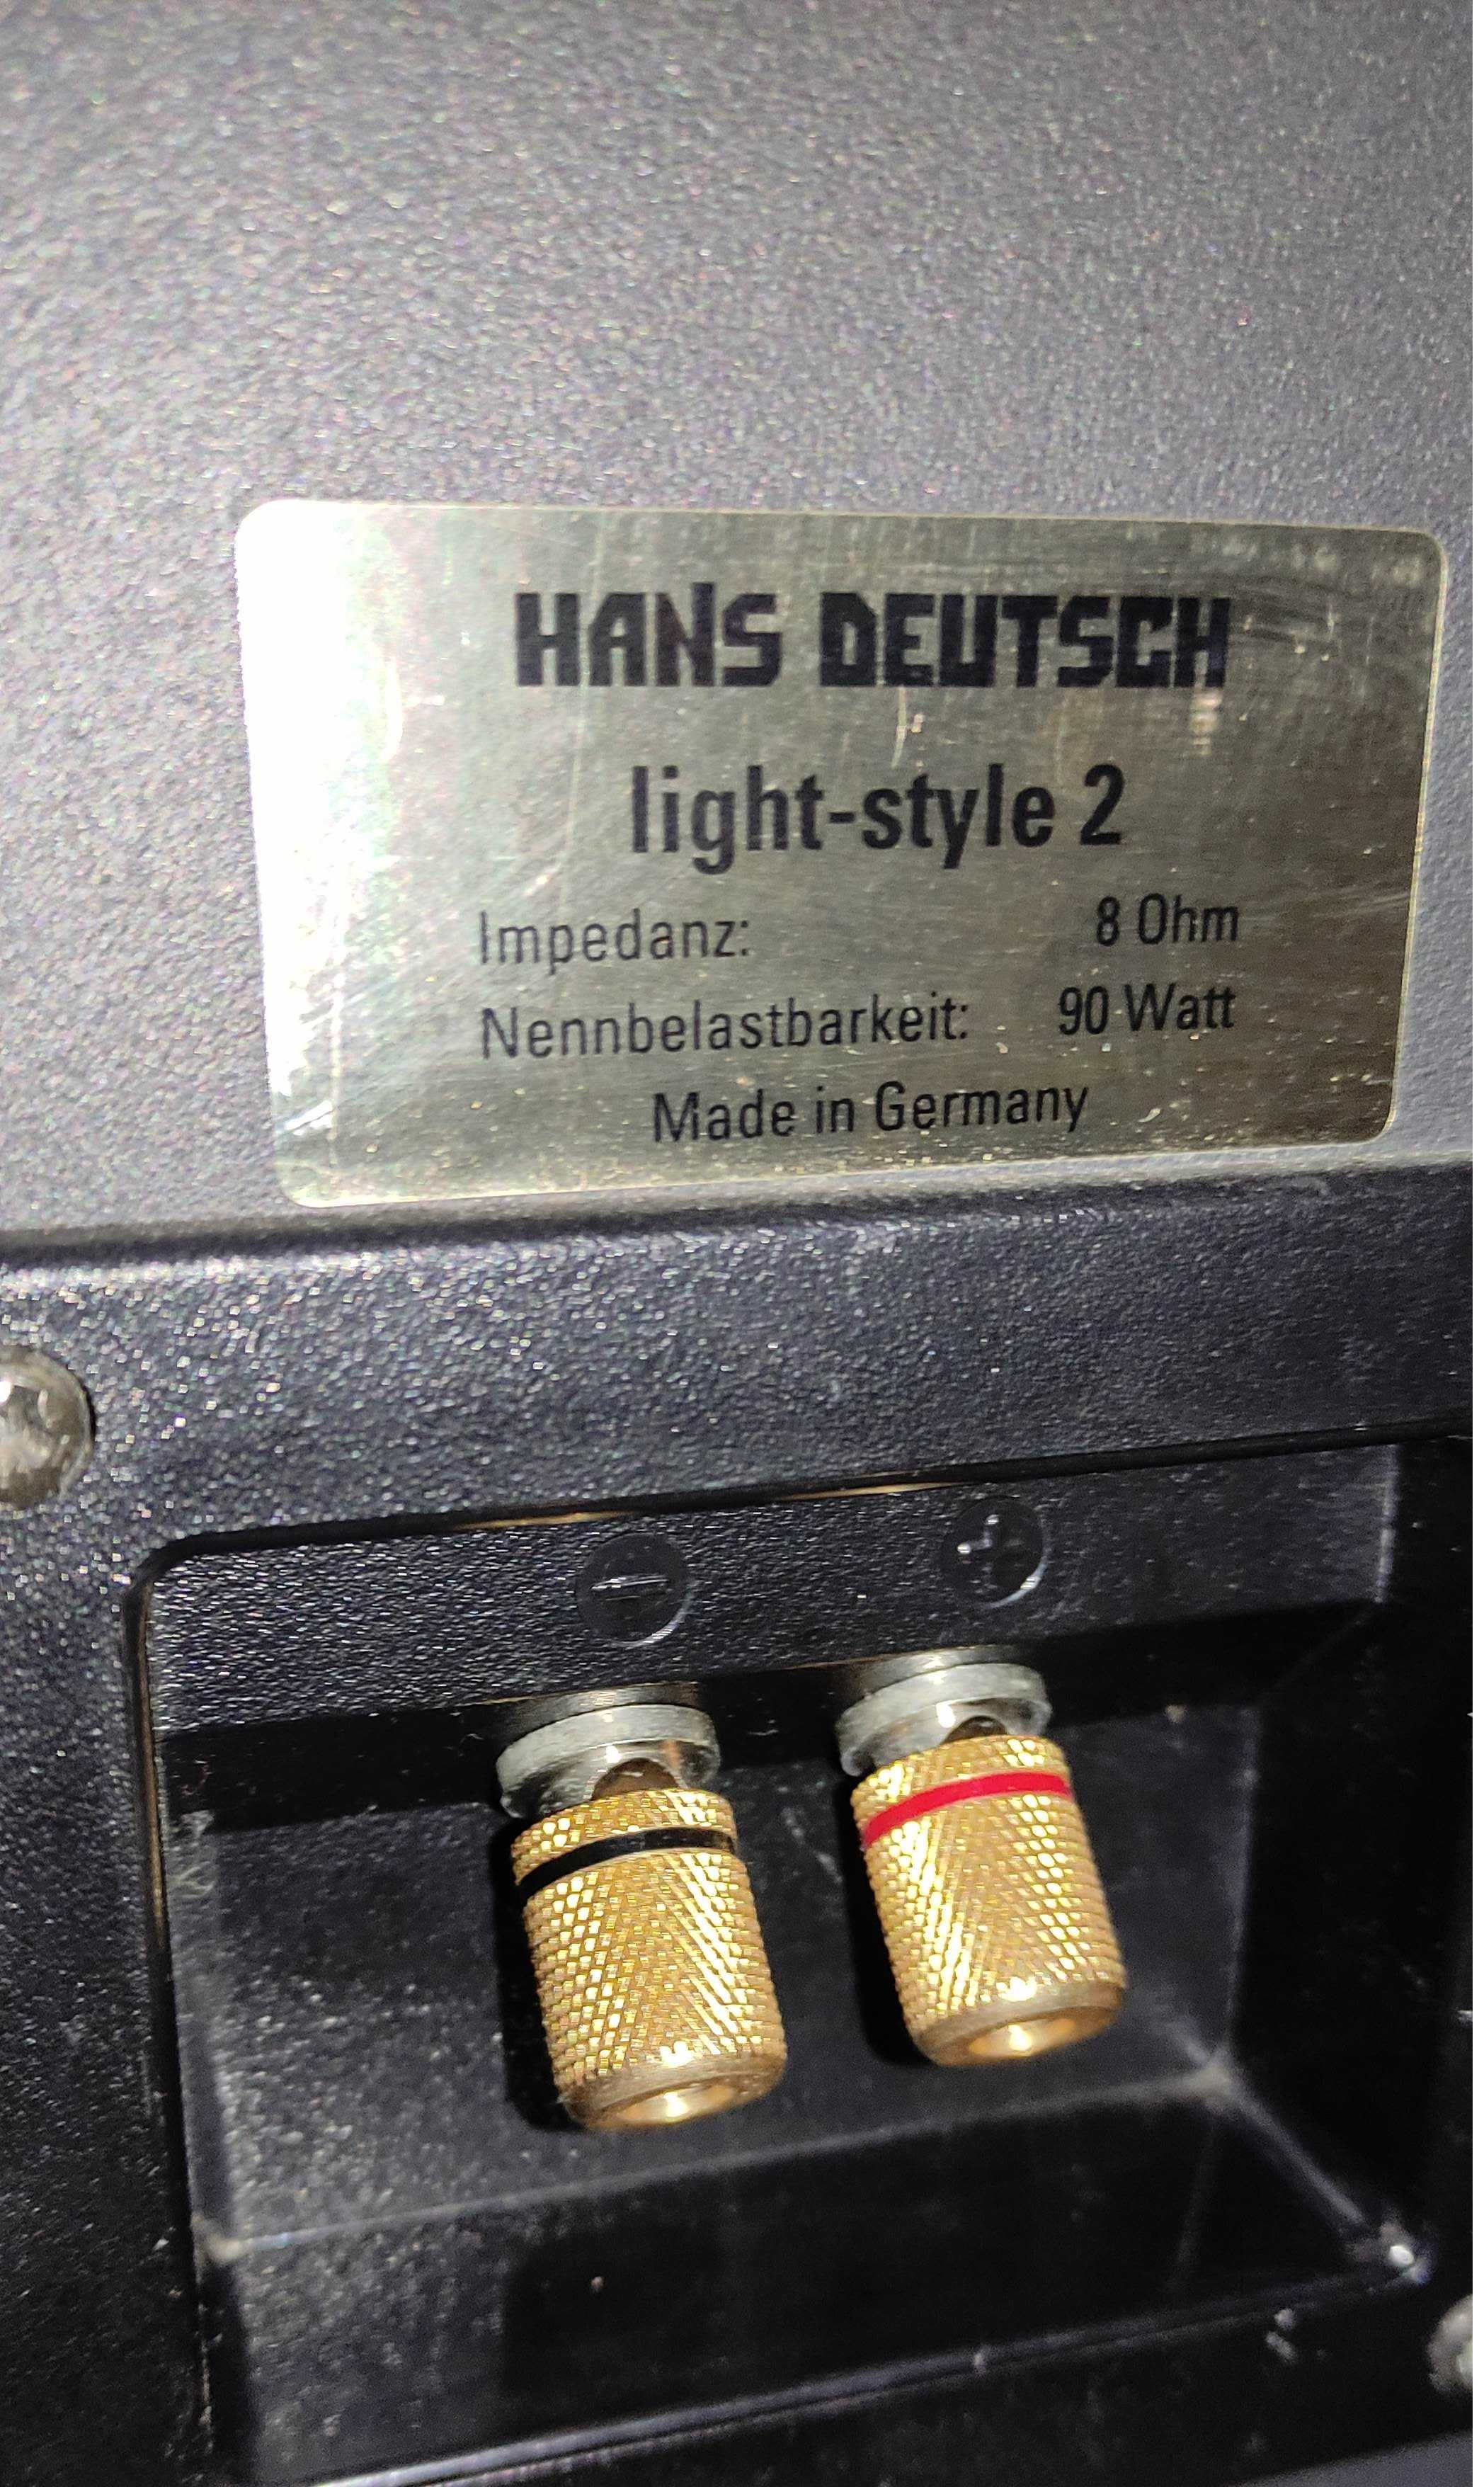 Hans Deutsch LS II ретейл около 2500$. дистрибьютор Oyaide